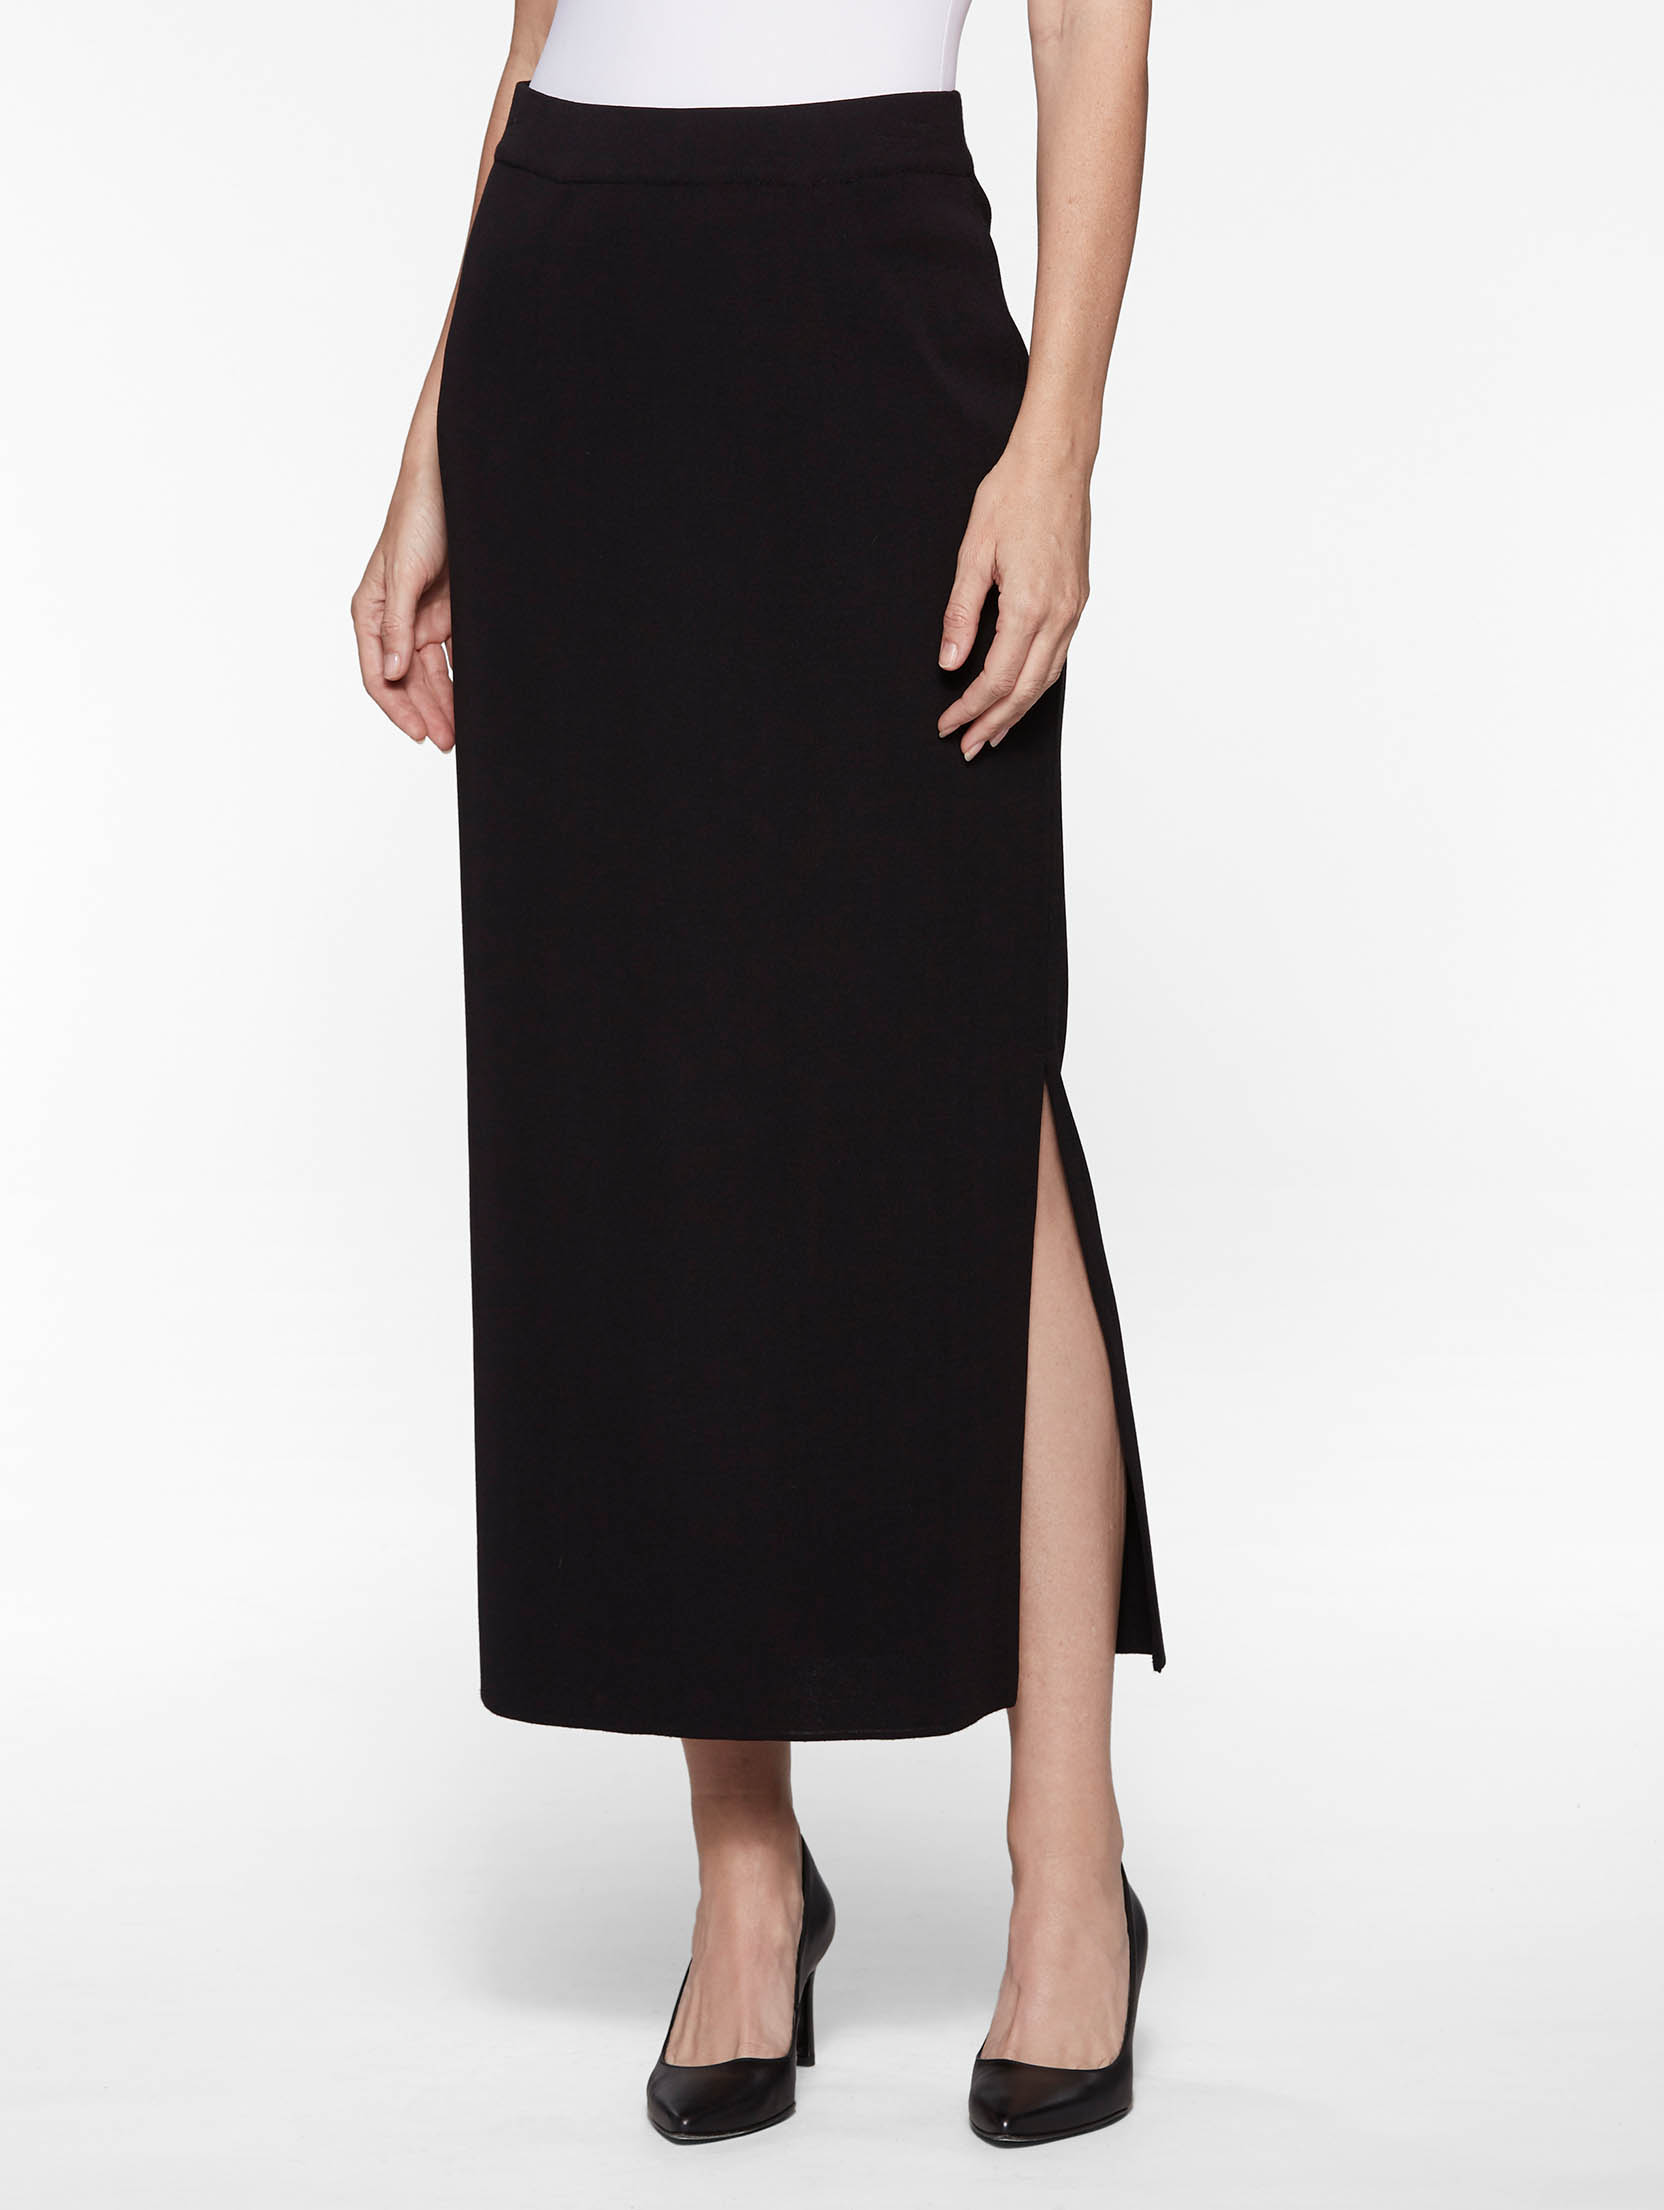 Xersion Studio Knit Skirt Size XL New Msrp $30.00 Black/Grey 